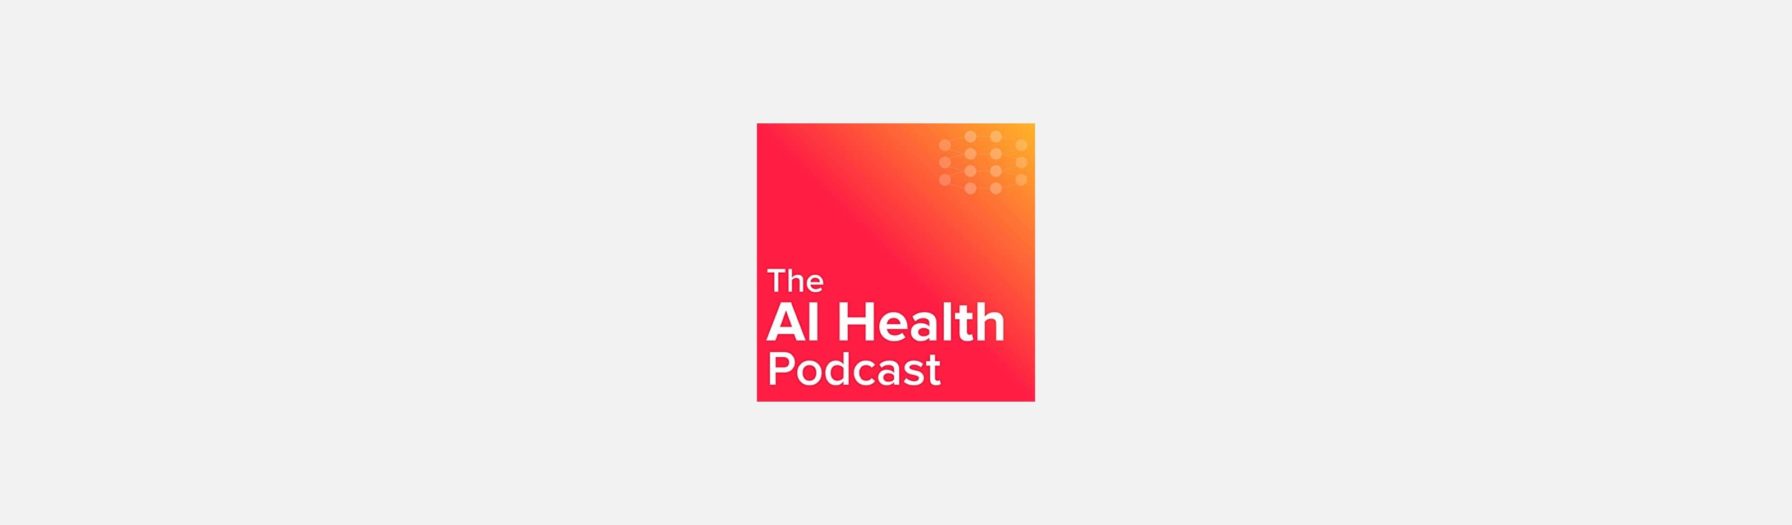  AI Health Podcast logo